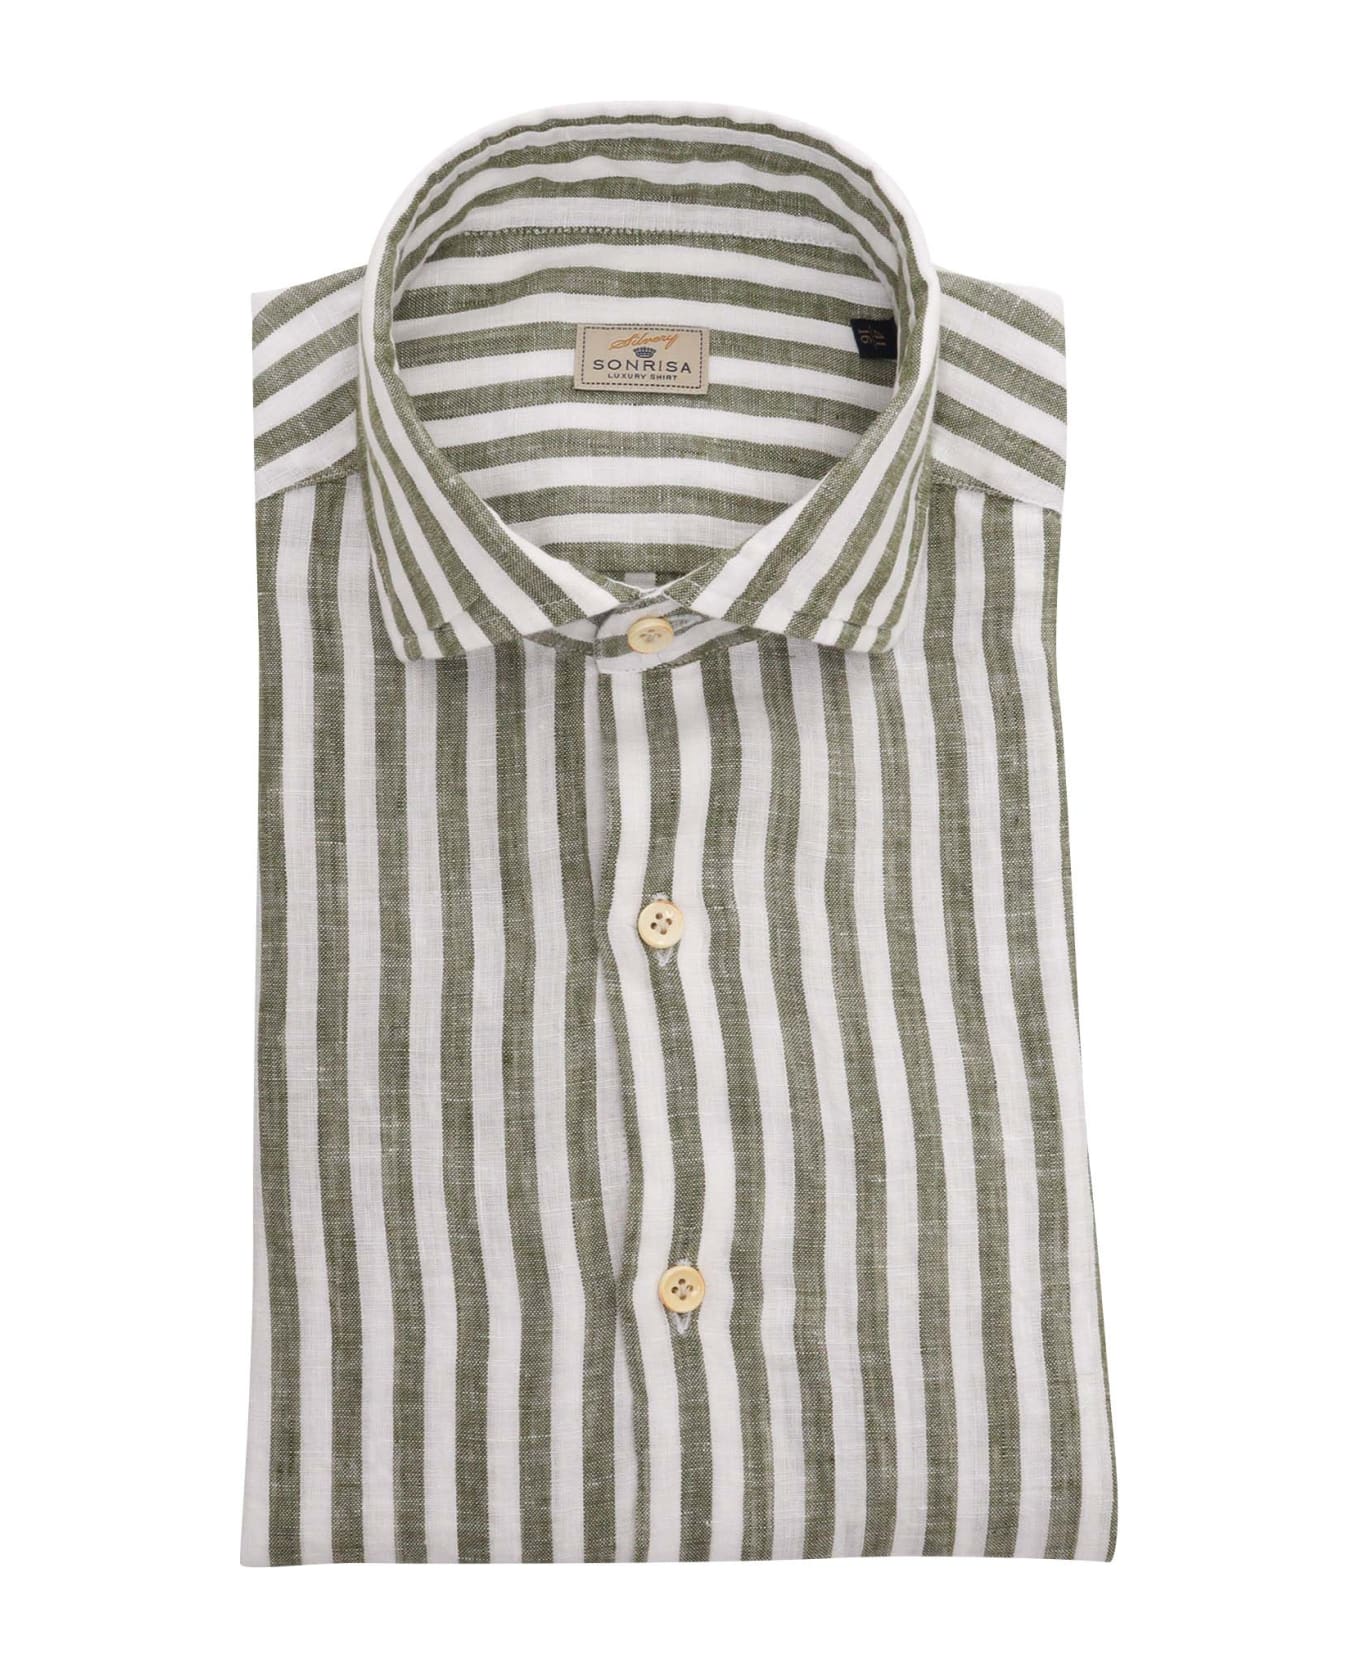 Sonrisa Brown Striped Shirt - MULTICOLOR